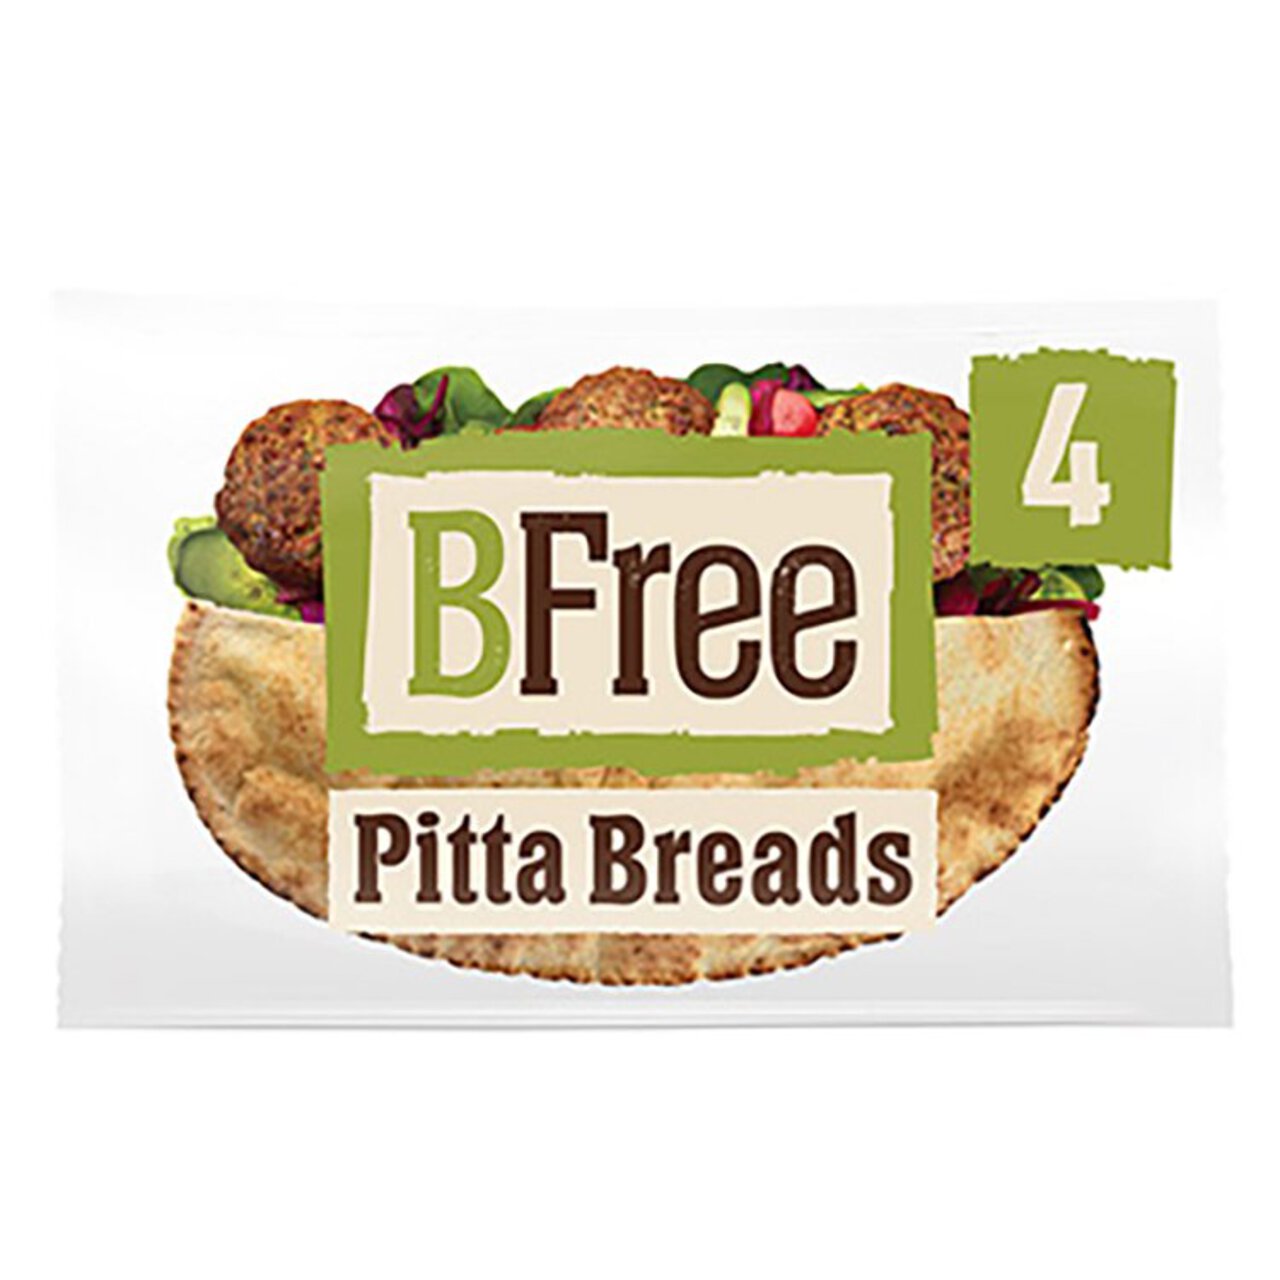 BFree Stone Baked Pitta Breads 4 x 55g